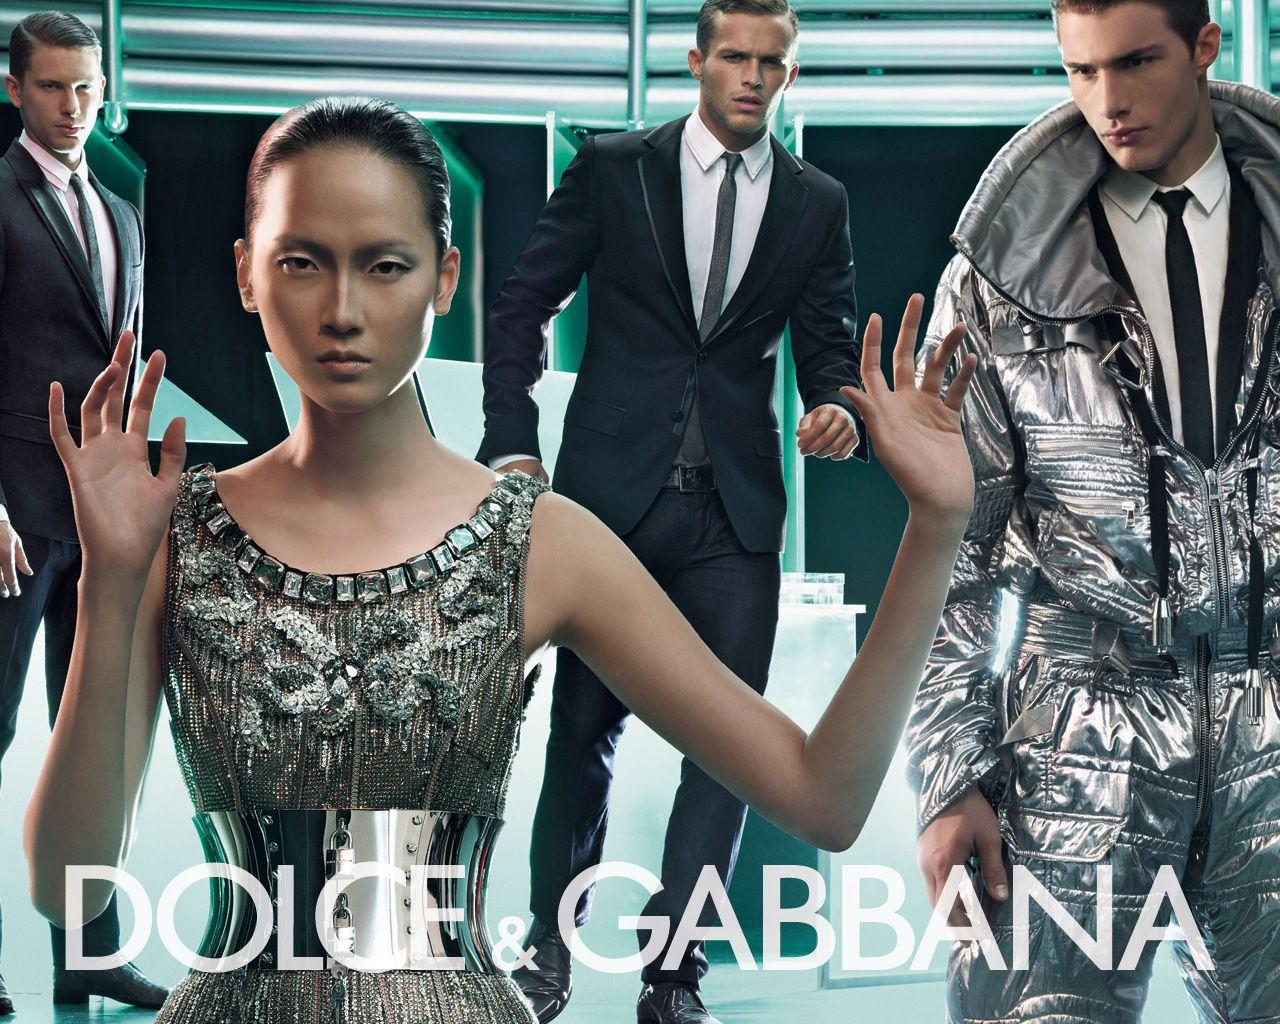 Dolce & Gabbana Wallpapers - Top Free Dolce & Gabbana Backgrounds ...